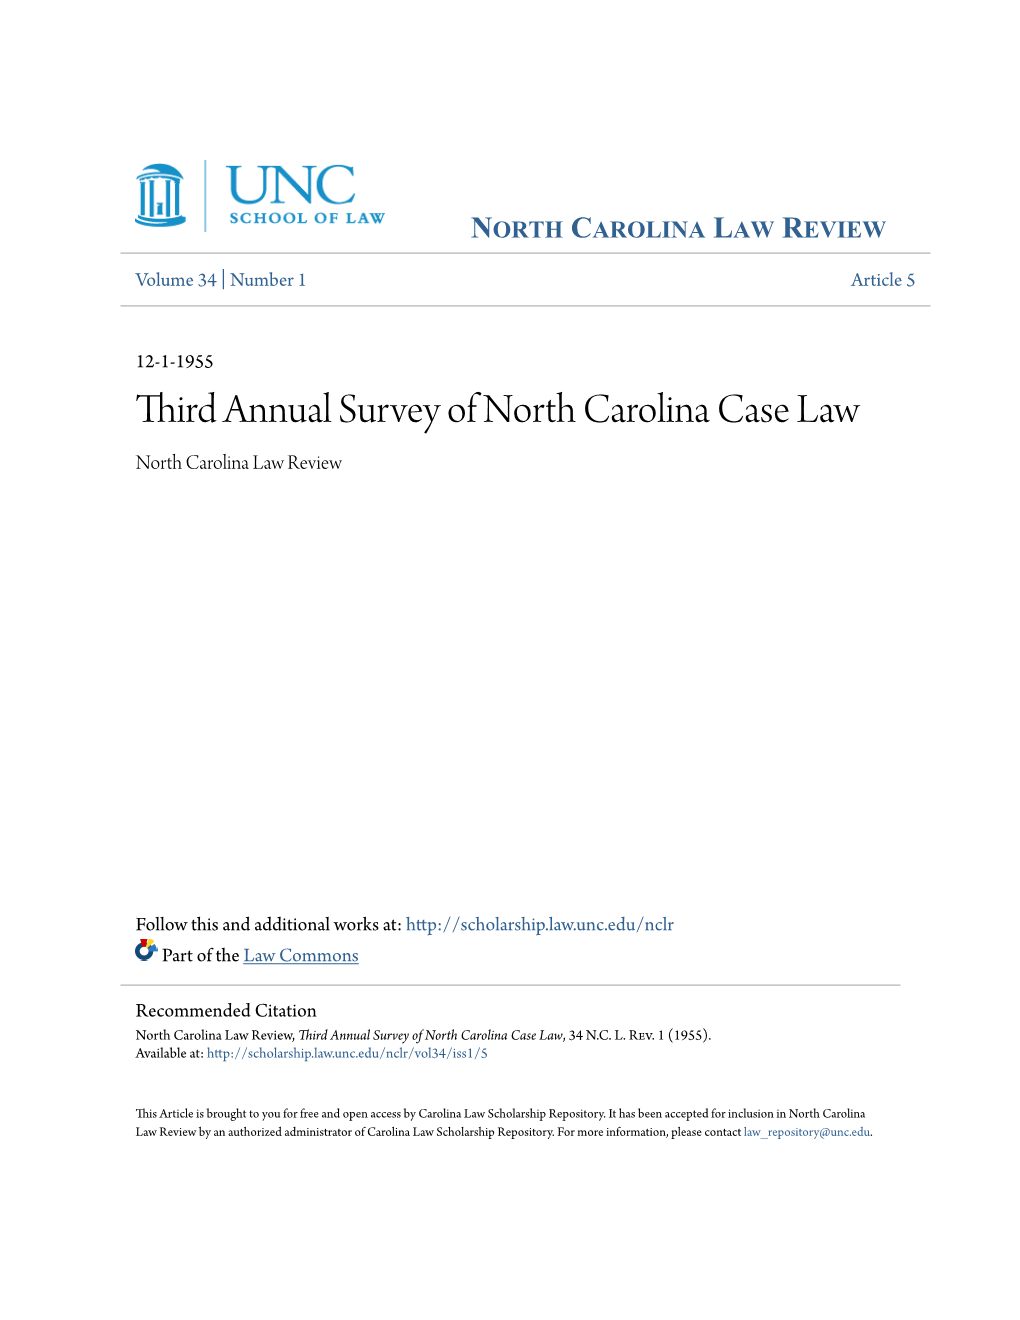 Third Annual Survey of North Carolina Case Law North Carolina Law Review